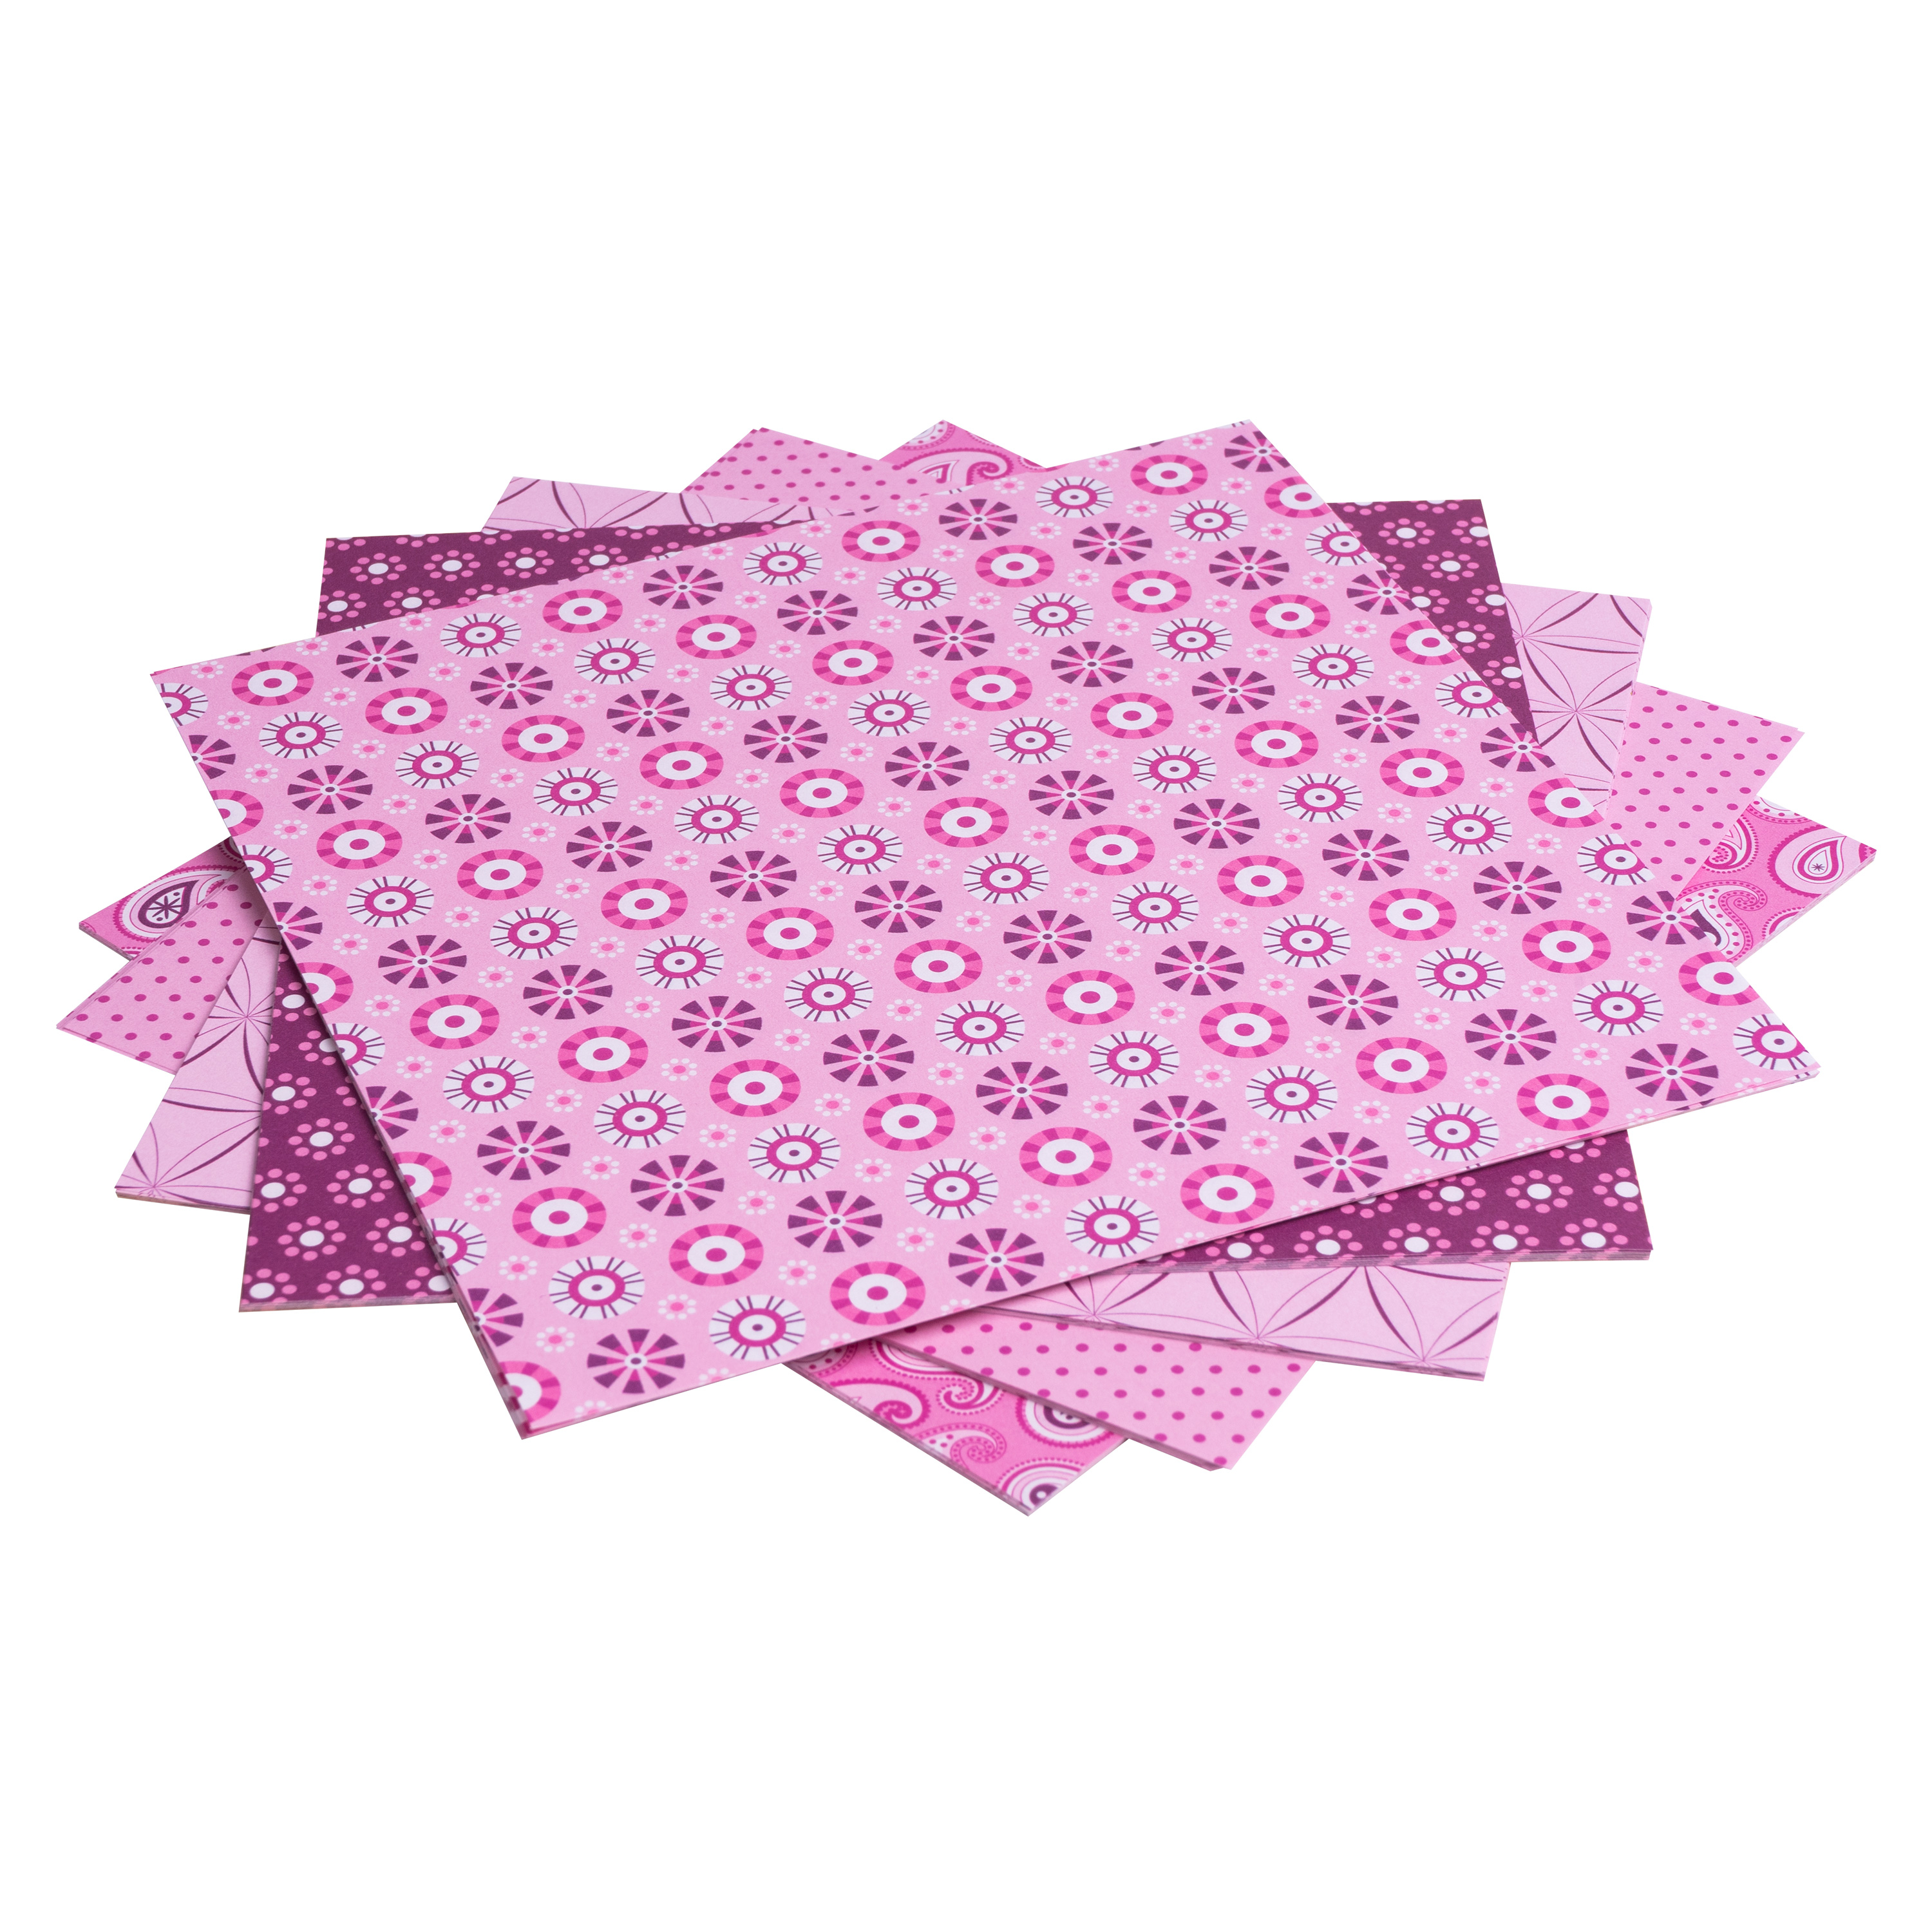 Origami Motiv-Faltblätter 'Basics', 15 x 15 cm, rosa